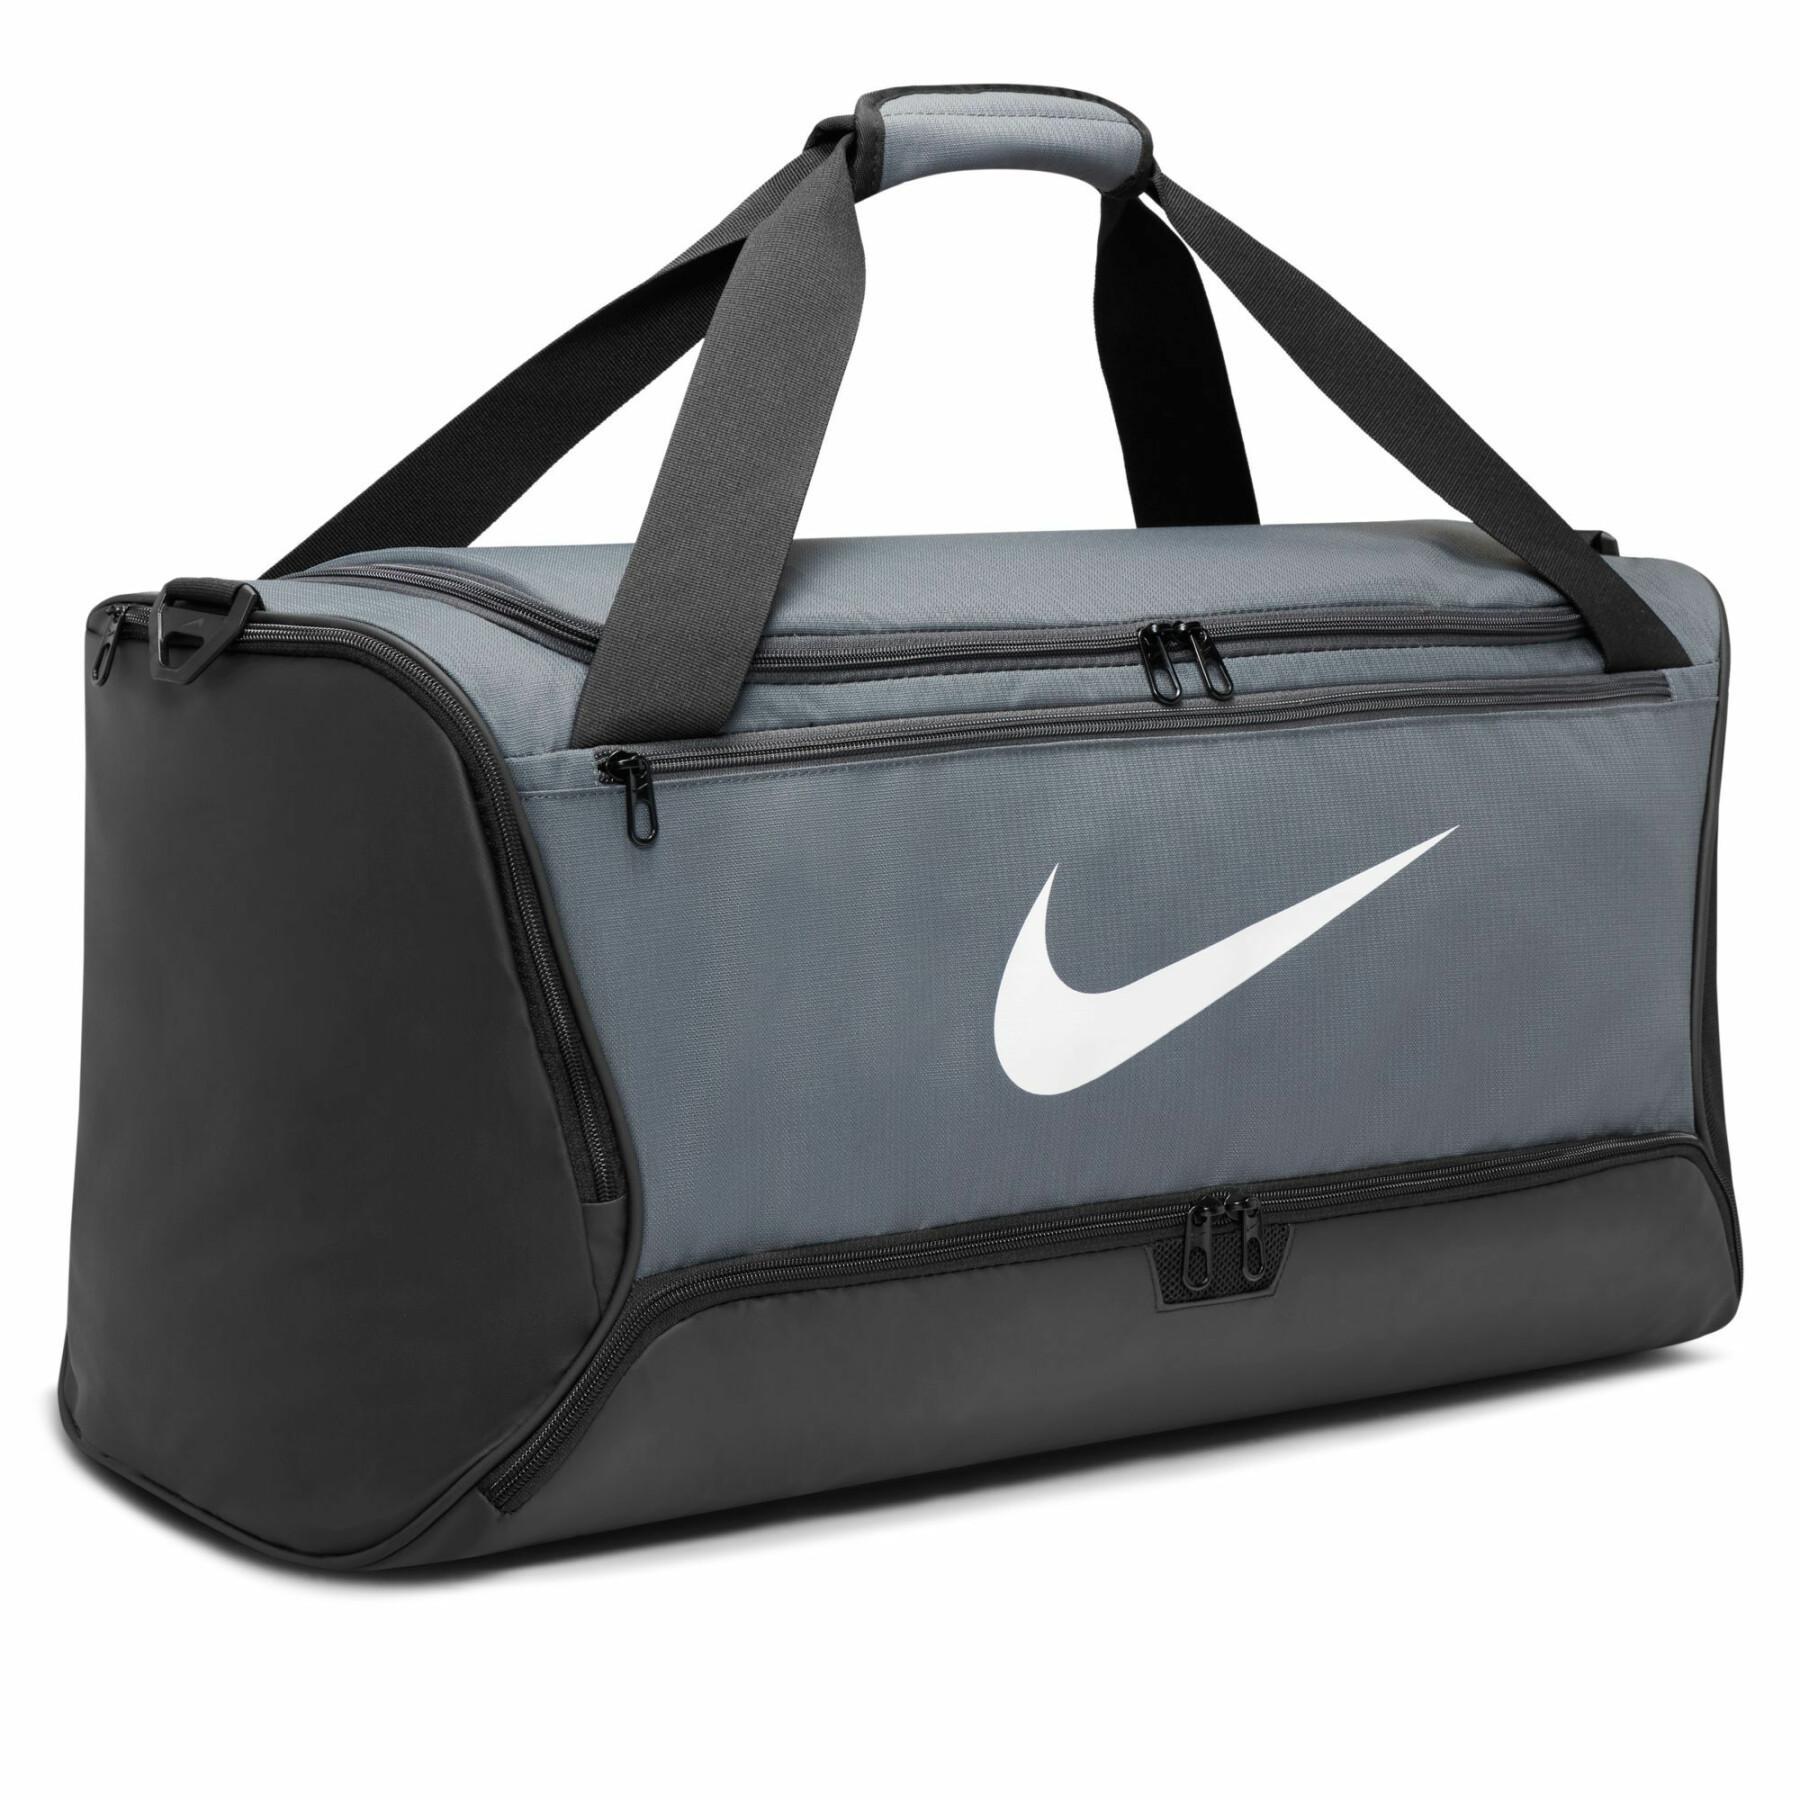 Sports bag Brasilia Large - Sports bag - Luggage - Equipment